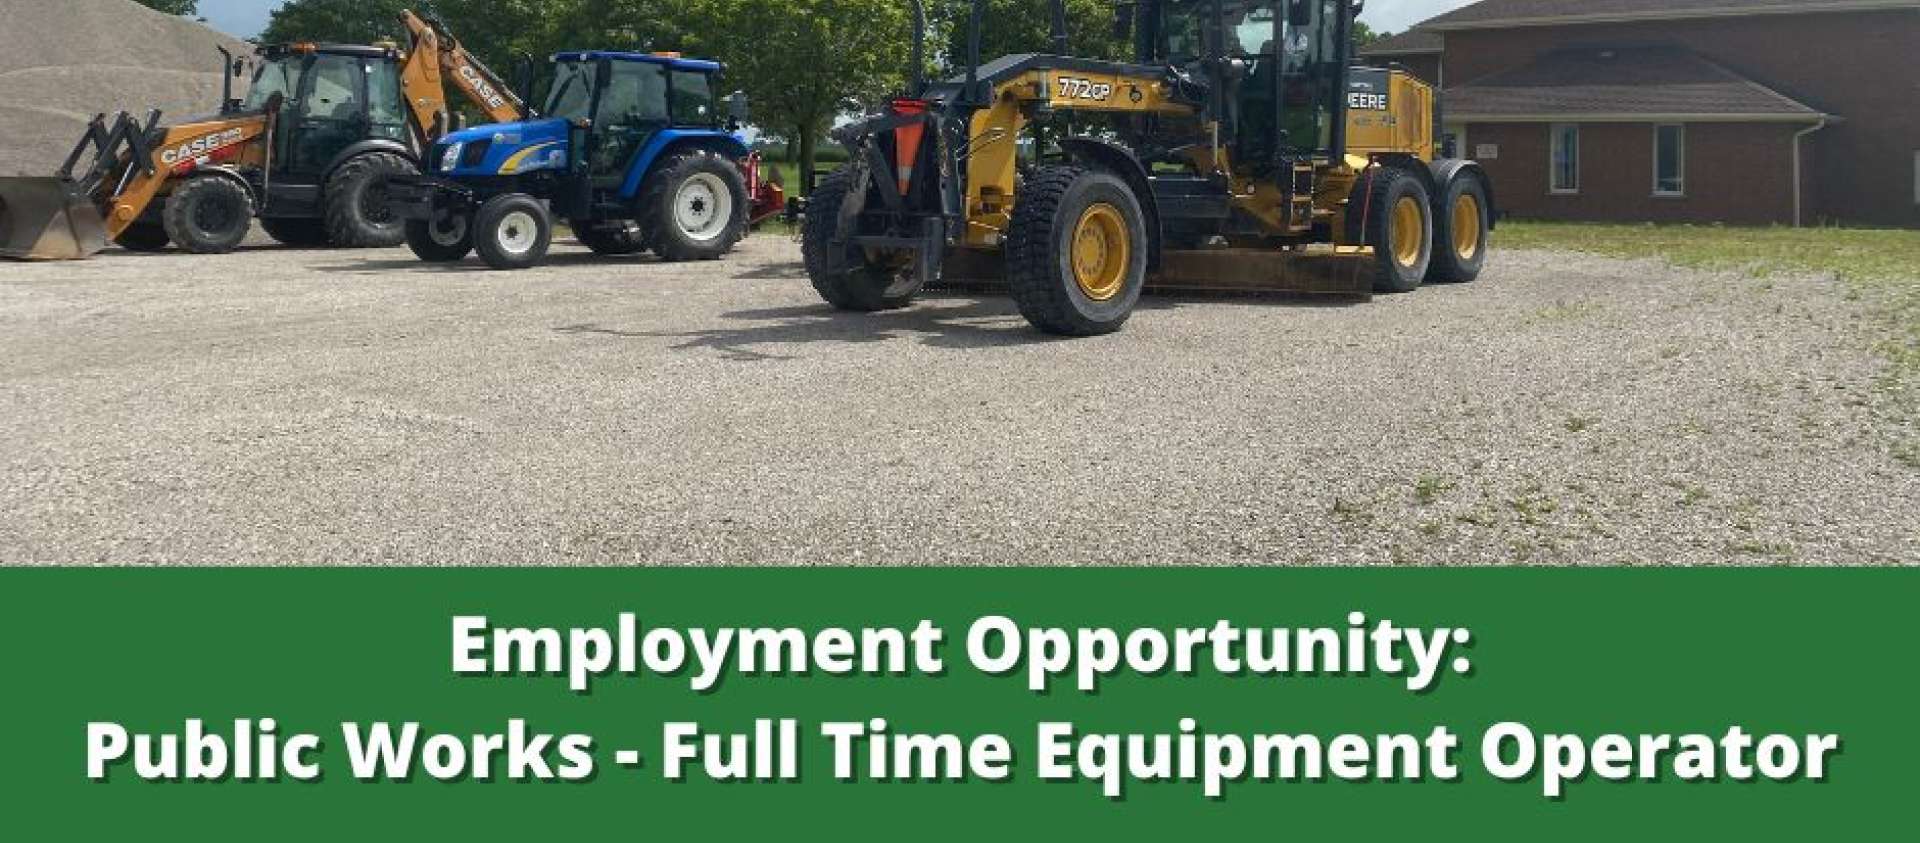 Job posting for Equipment Operator